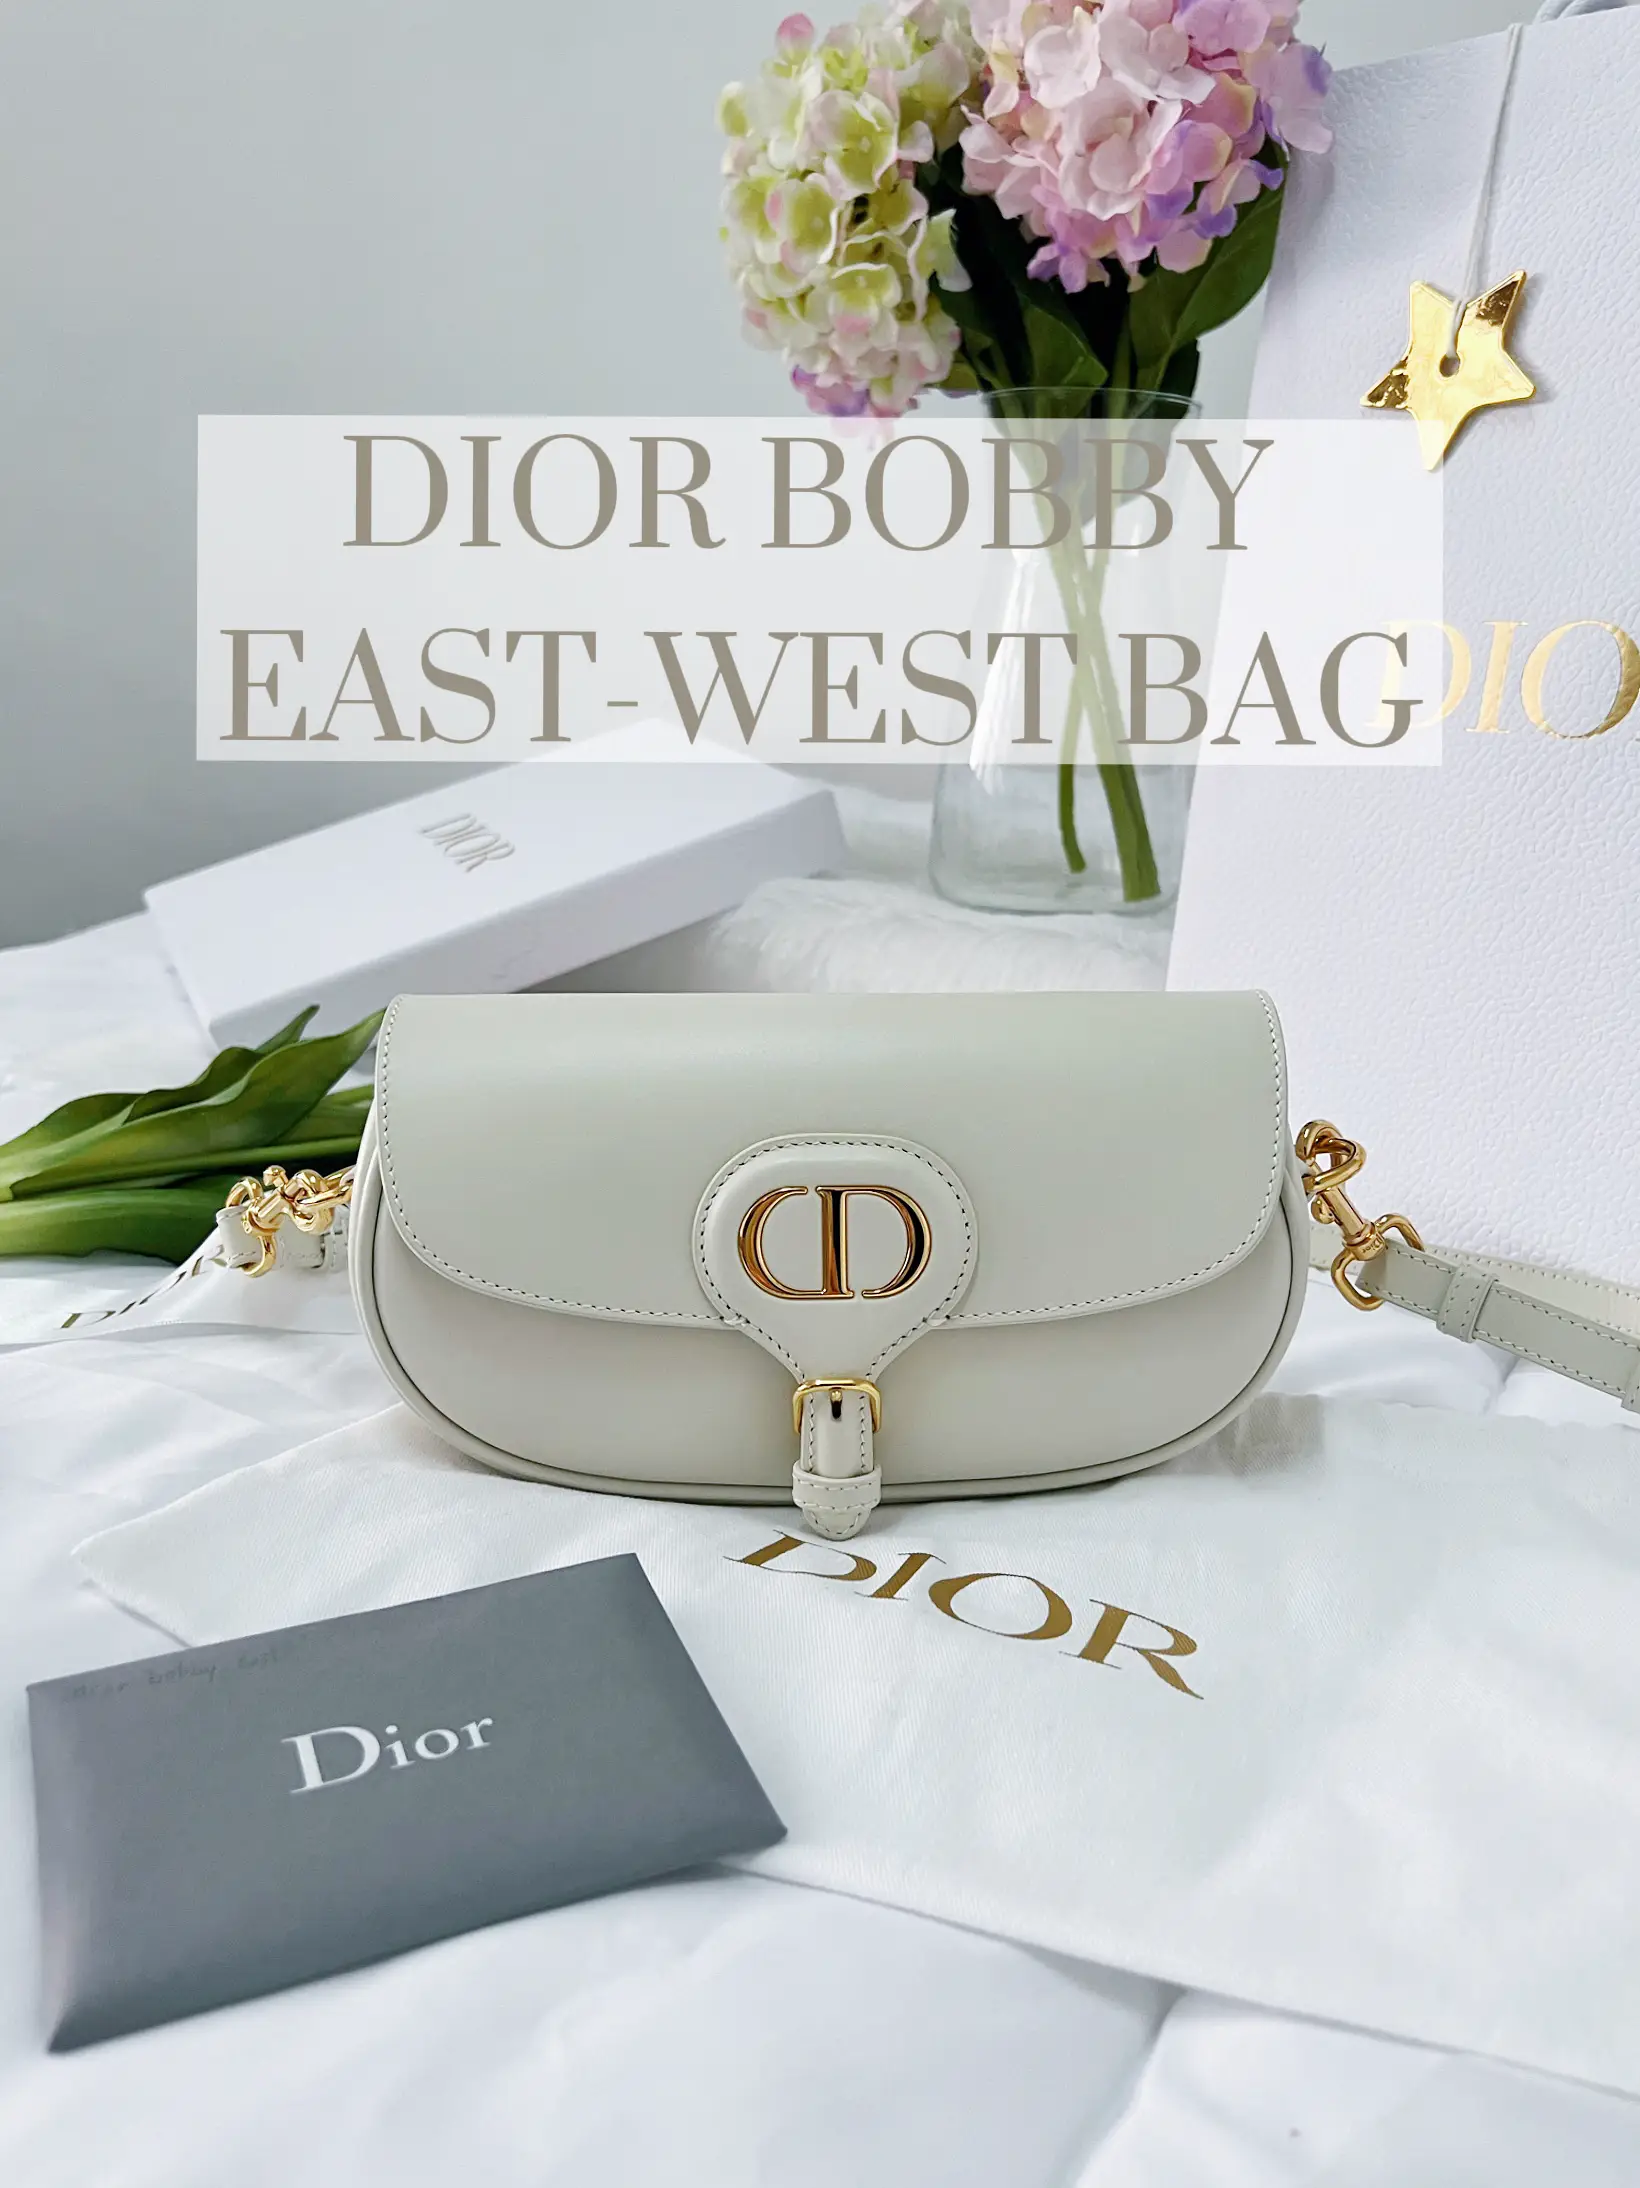 Dior Bobby East-West Bag Black Box Calfskin